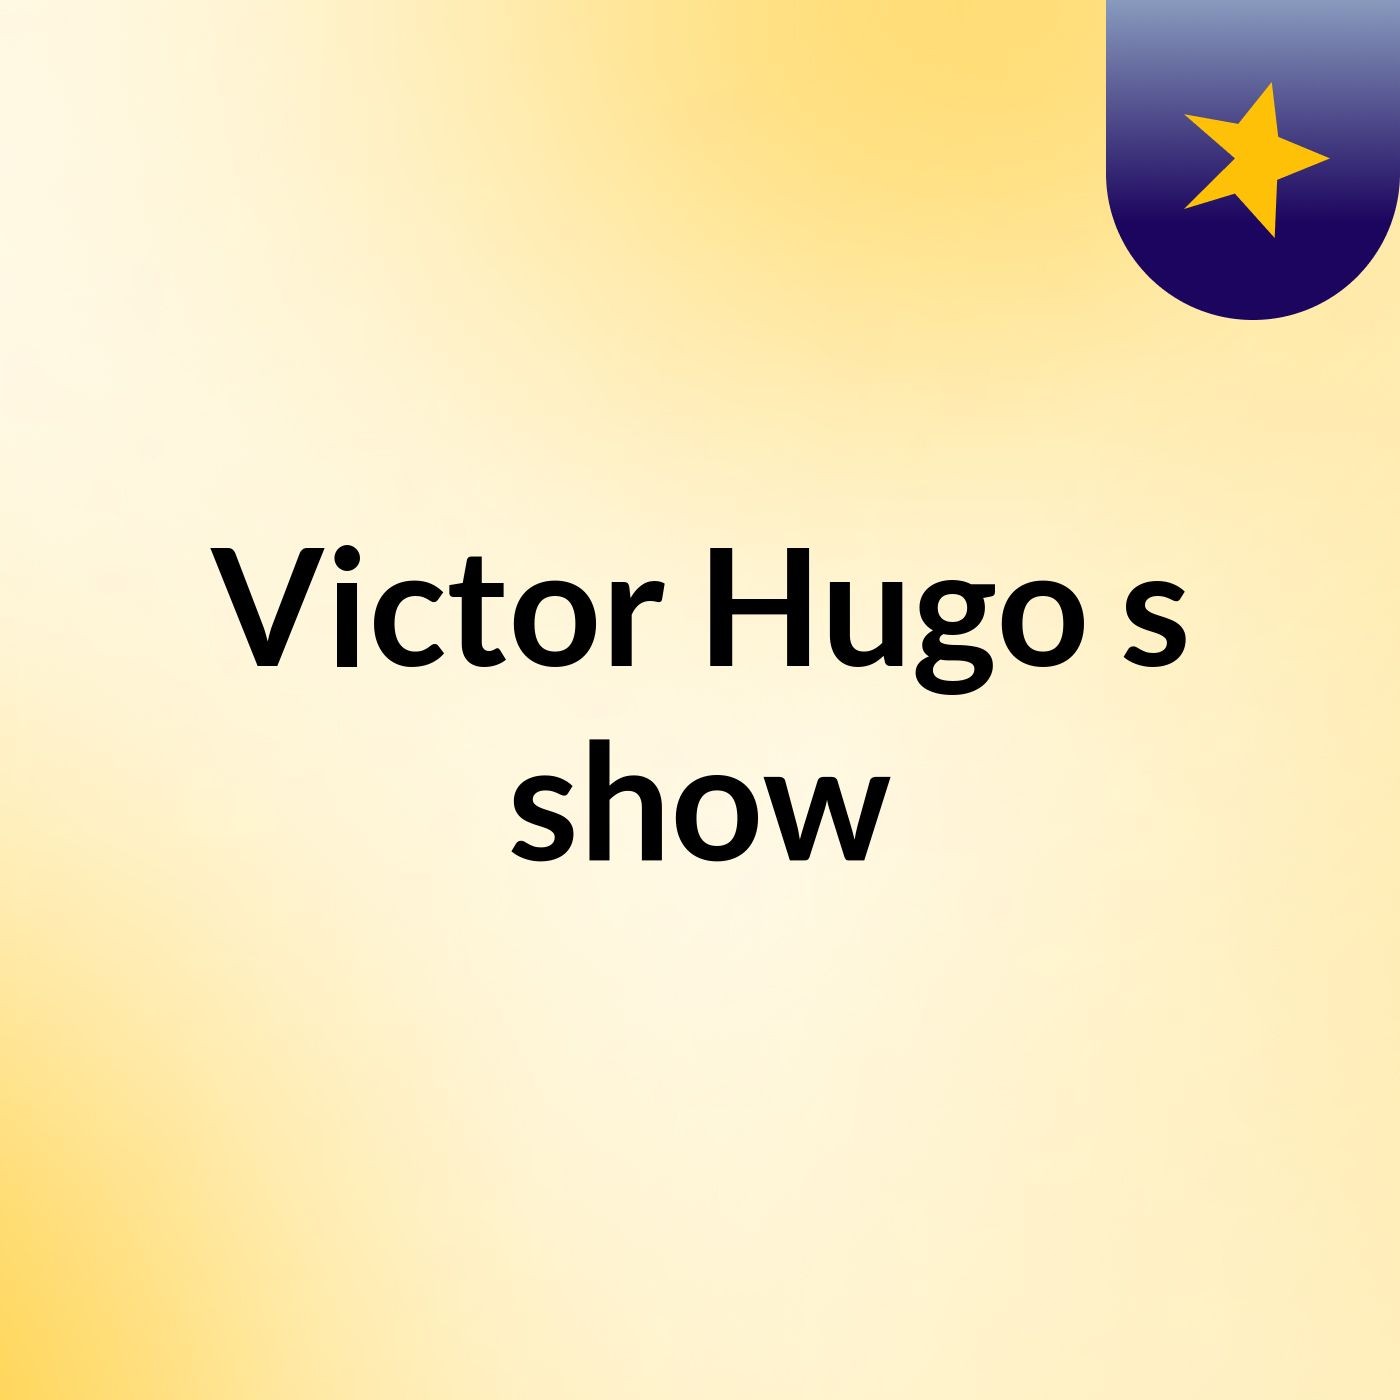 Victor Hugo's show